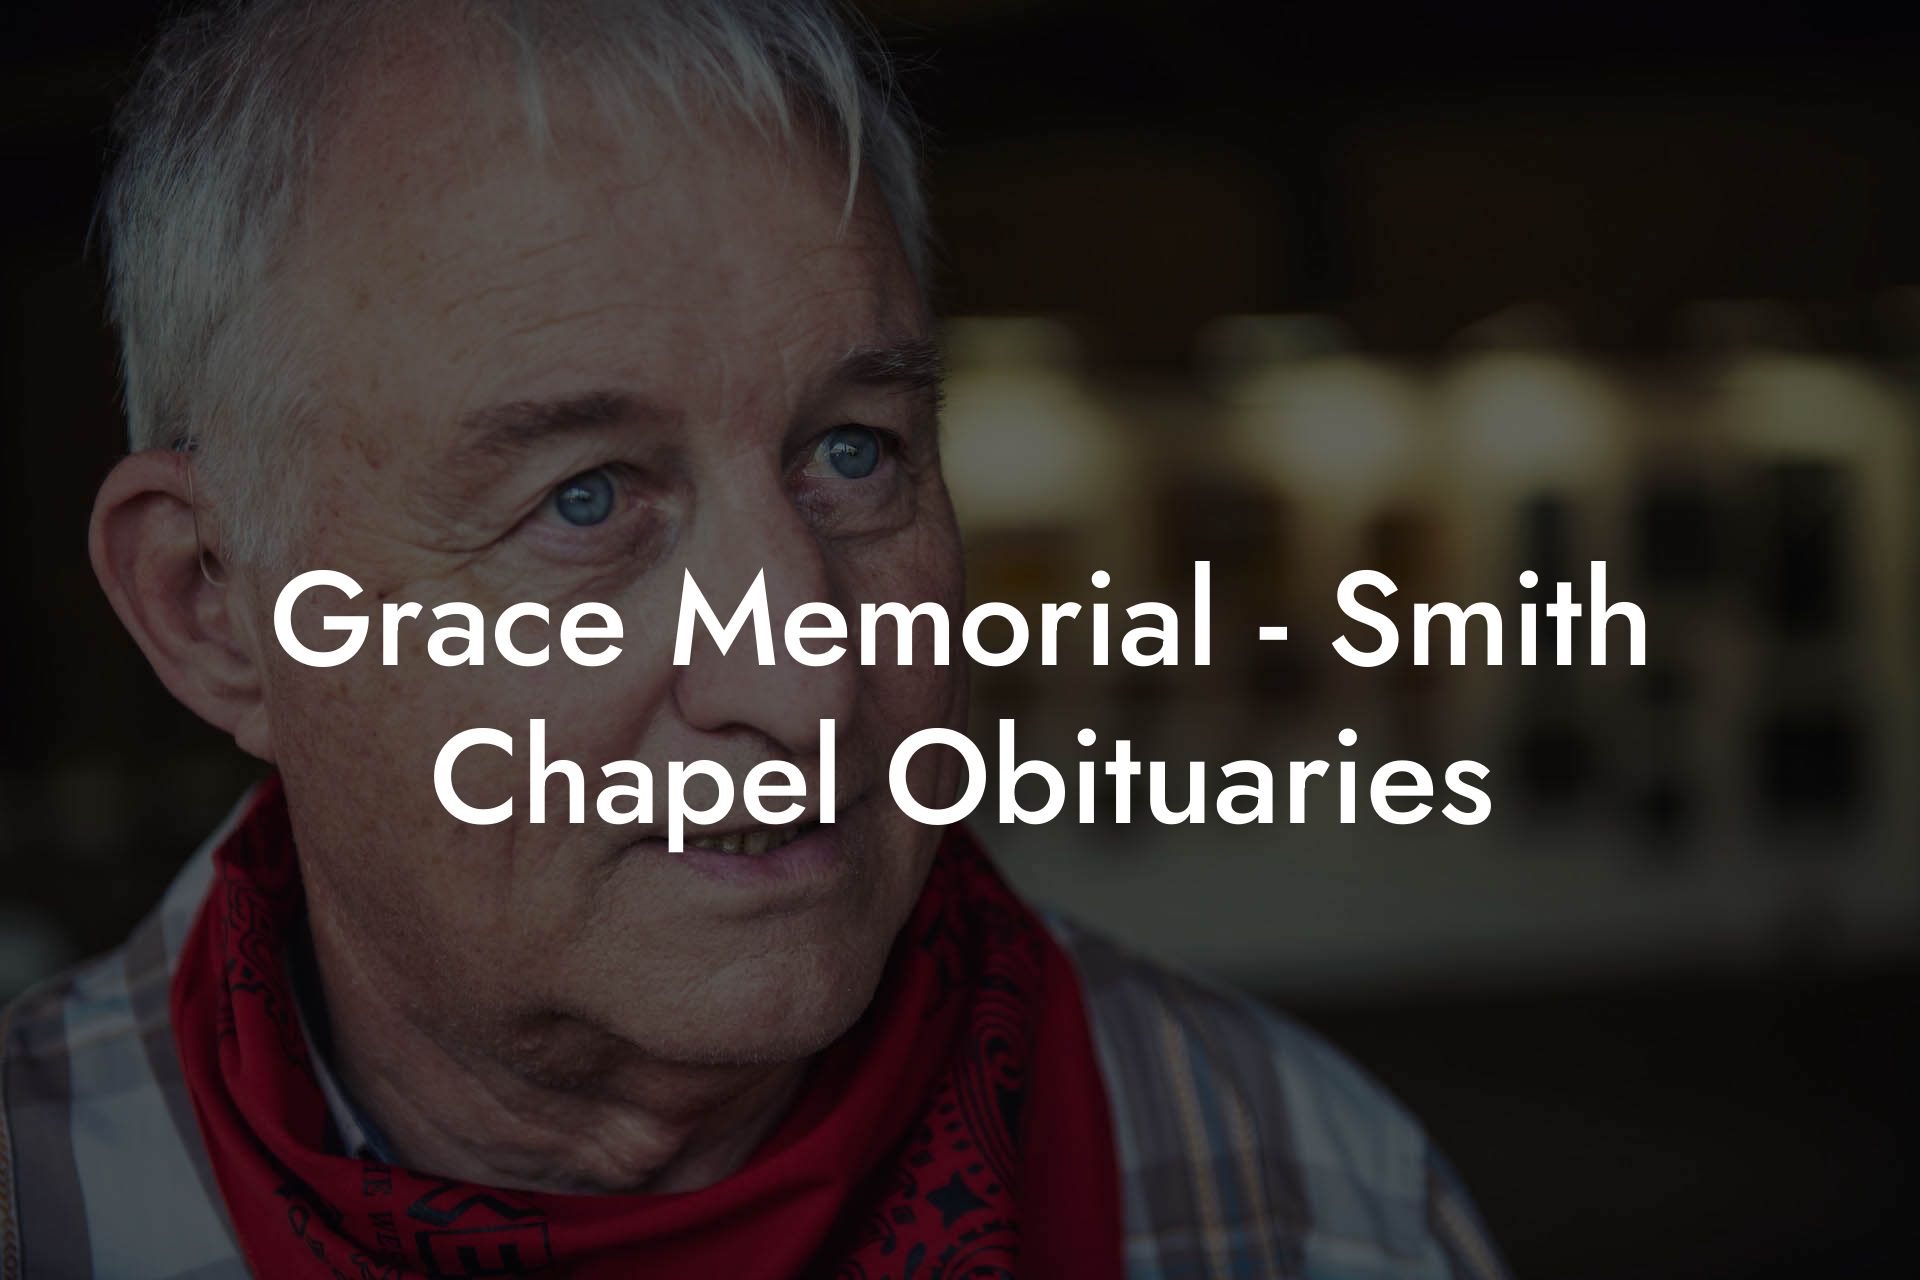 Grace Memorial - Smith Chapel Obituaries